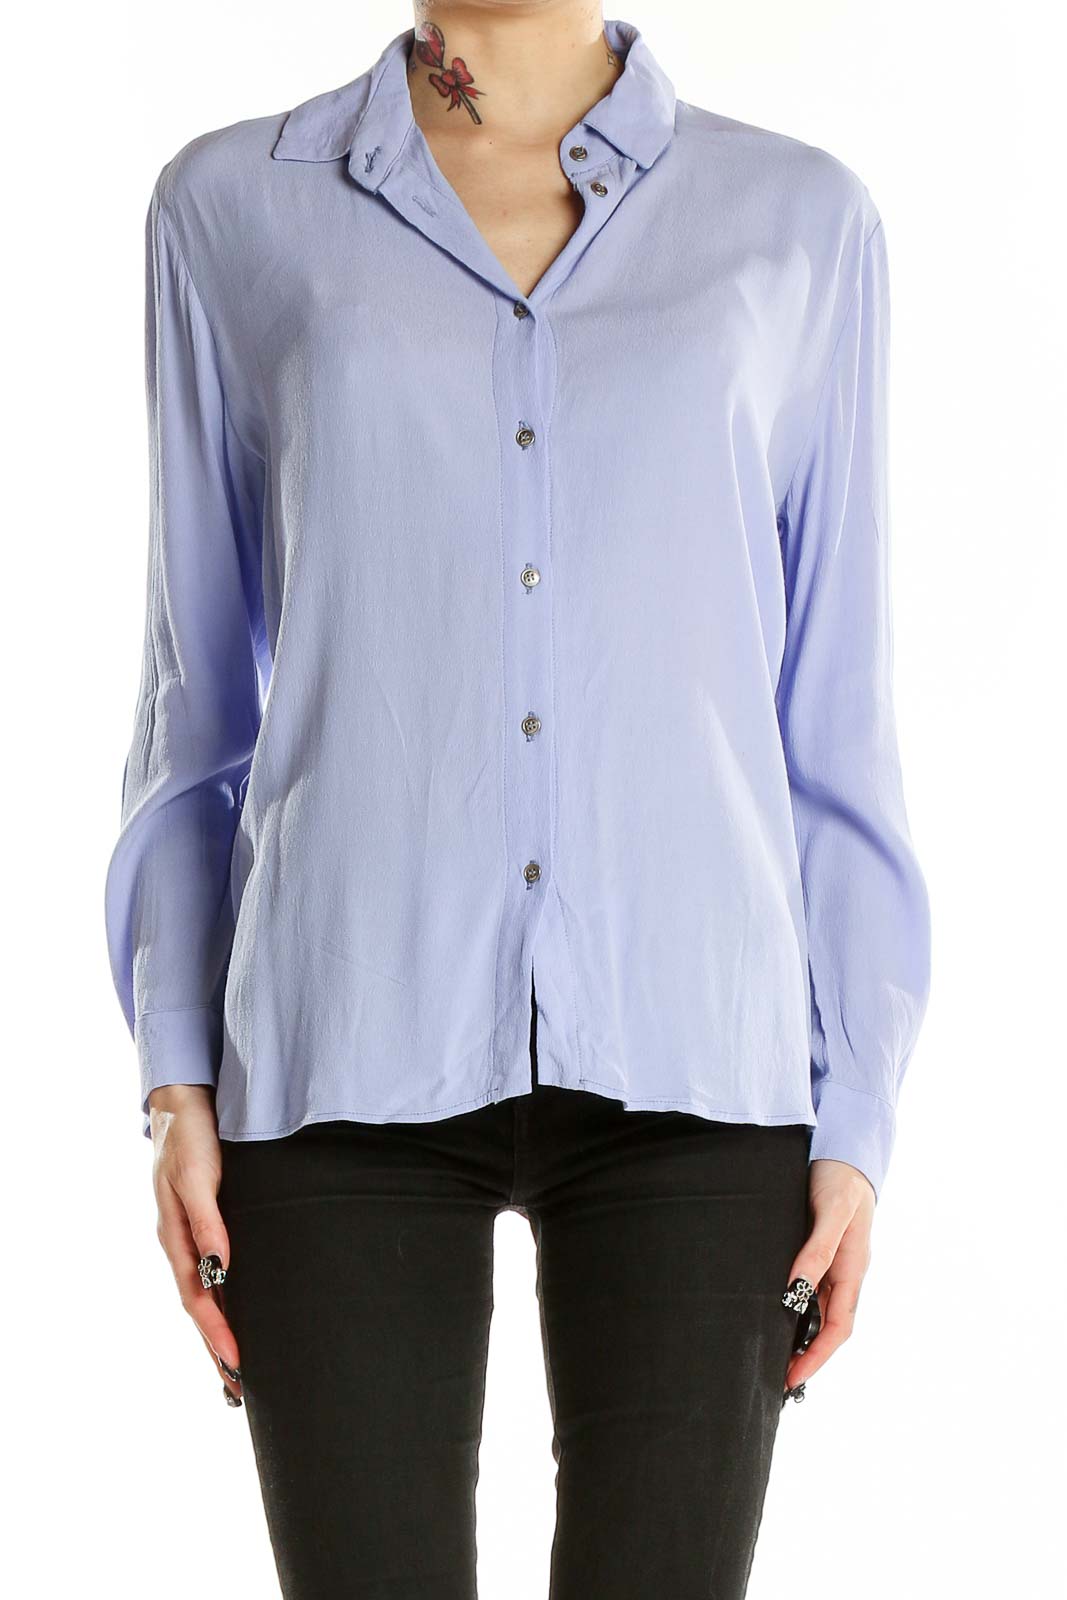 Blue Long Sleeve Shirt Front